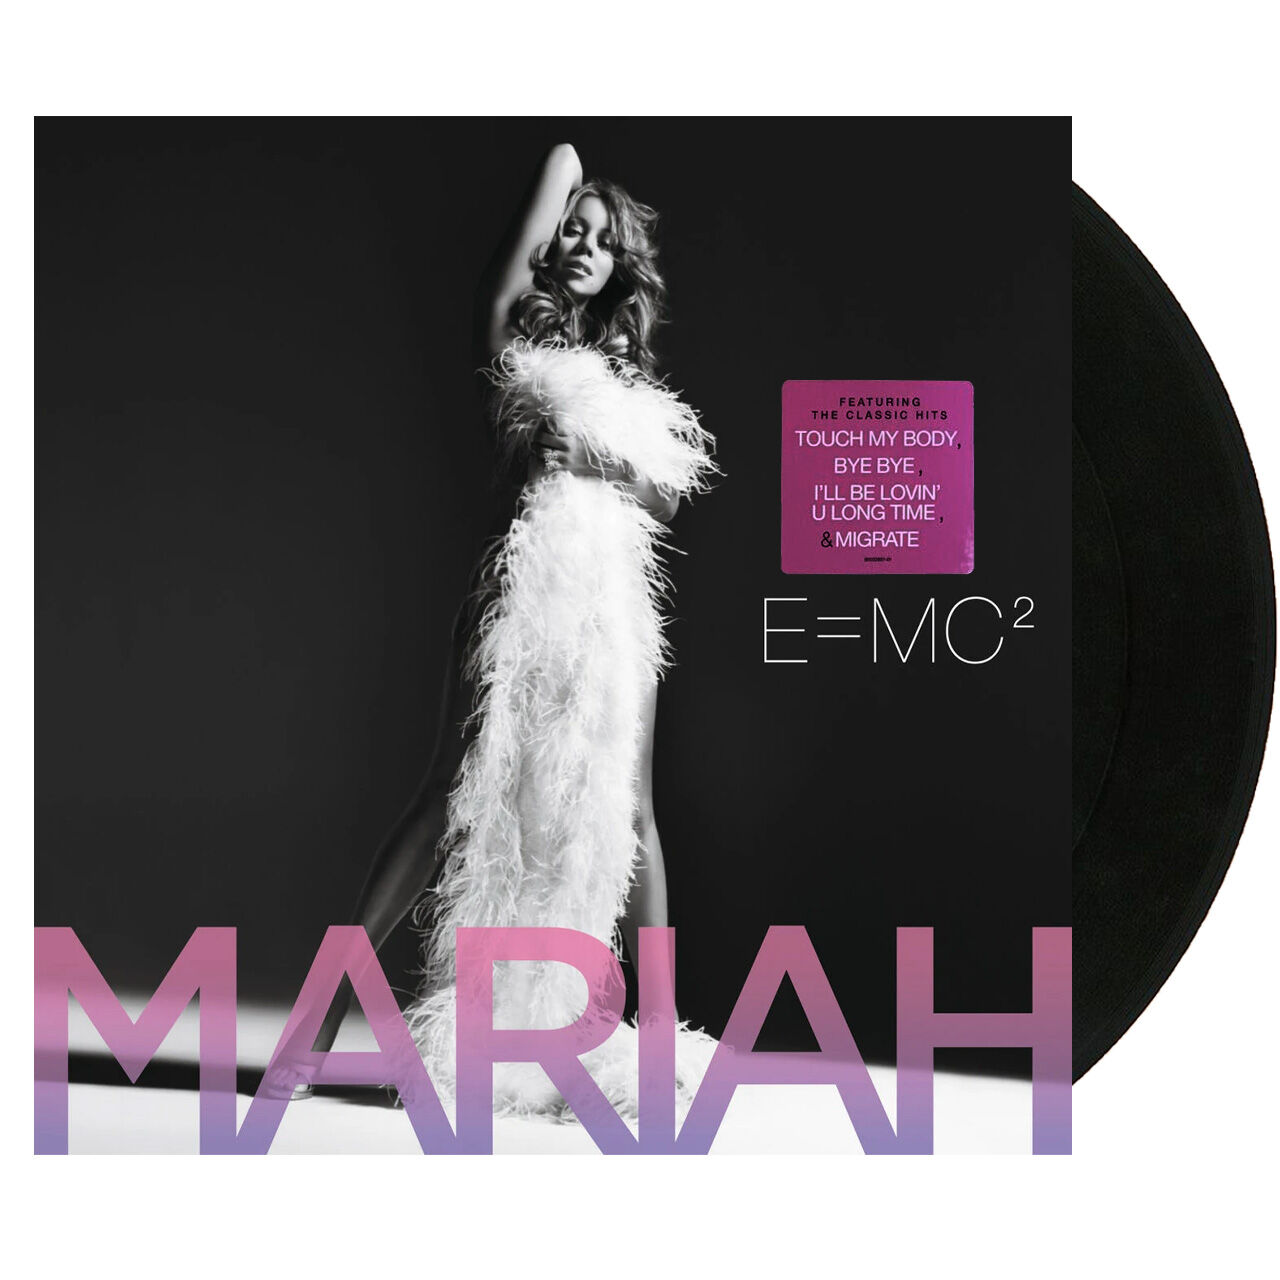 MARIAH-CAREY-EMC2-Vinyl.jpg?org_if_sml=0